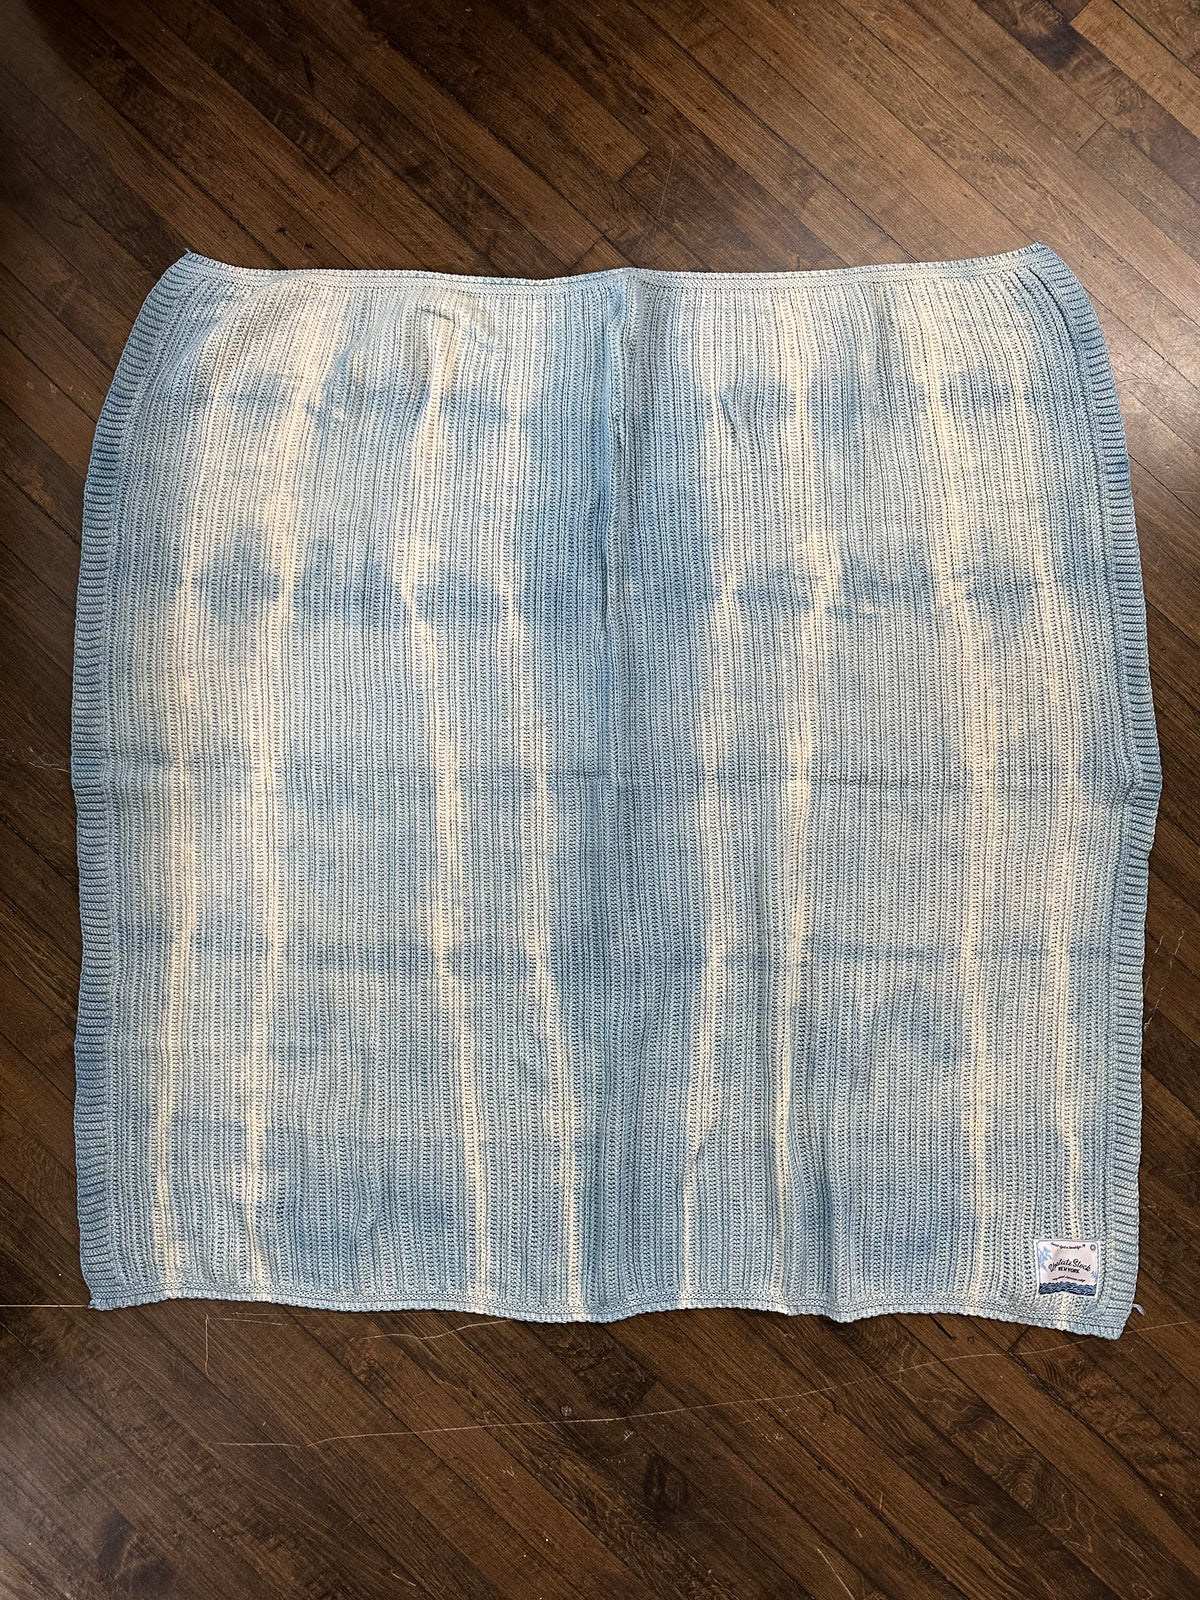 Deadstock Hand Dyed Indigo Blanket - Blanket #26